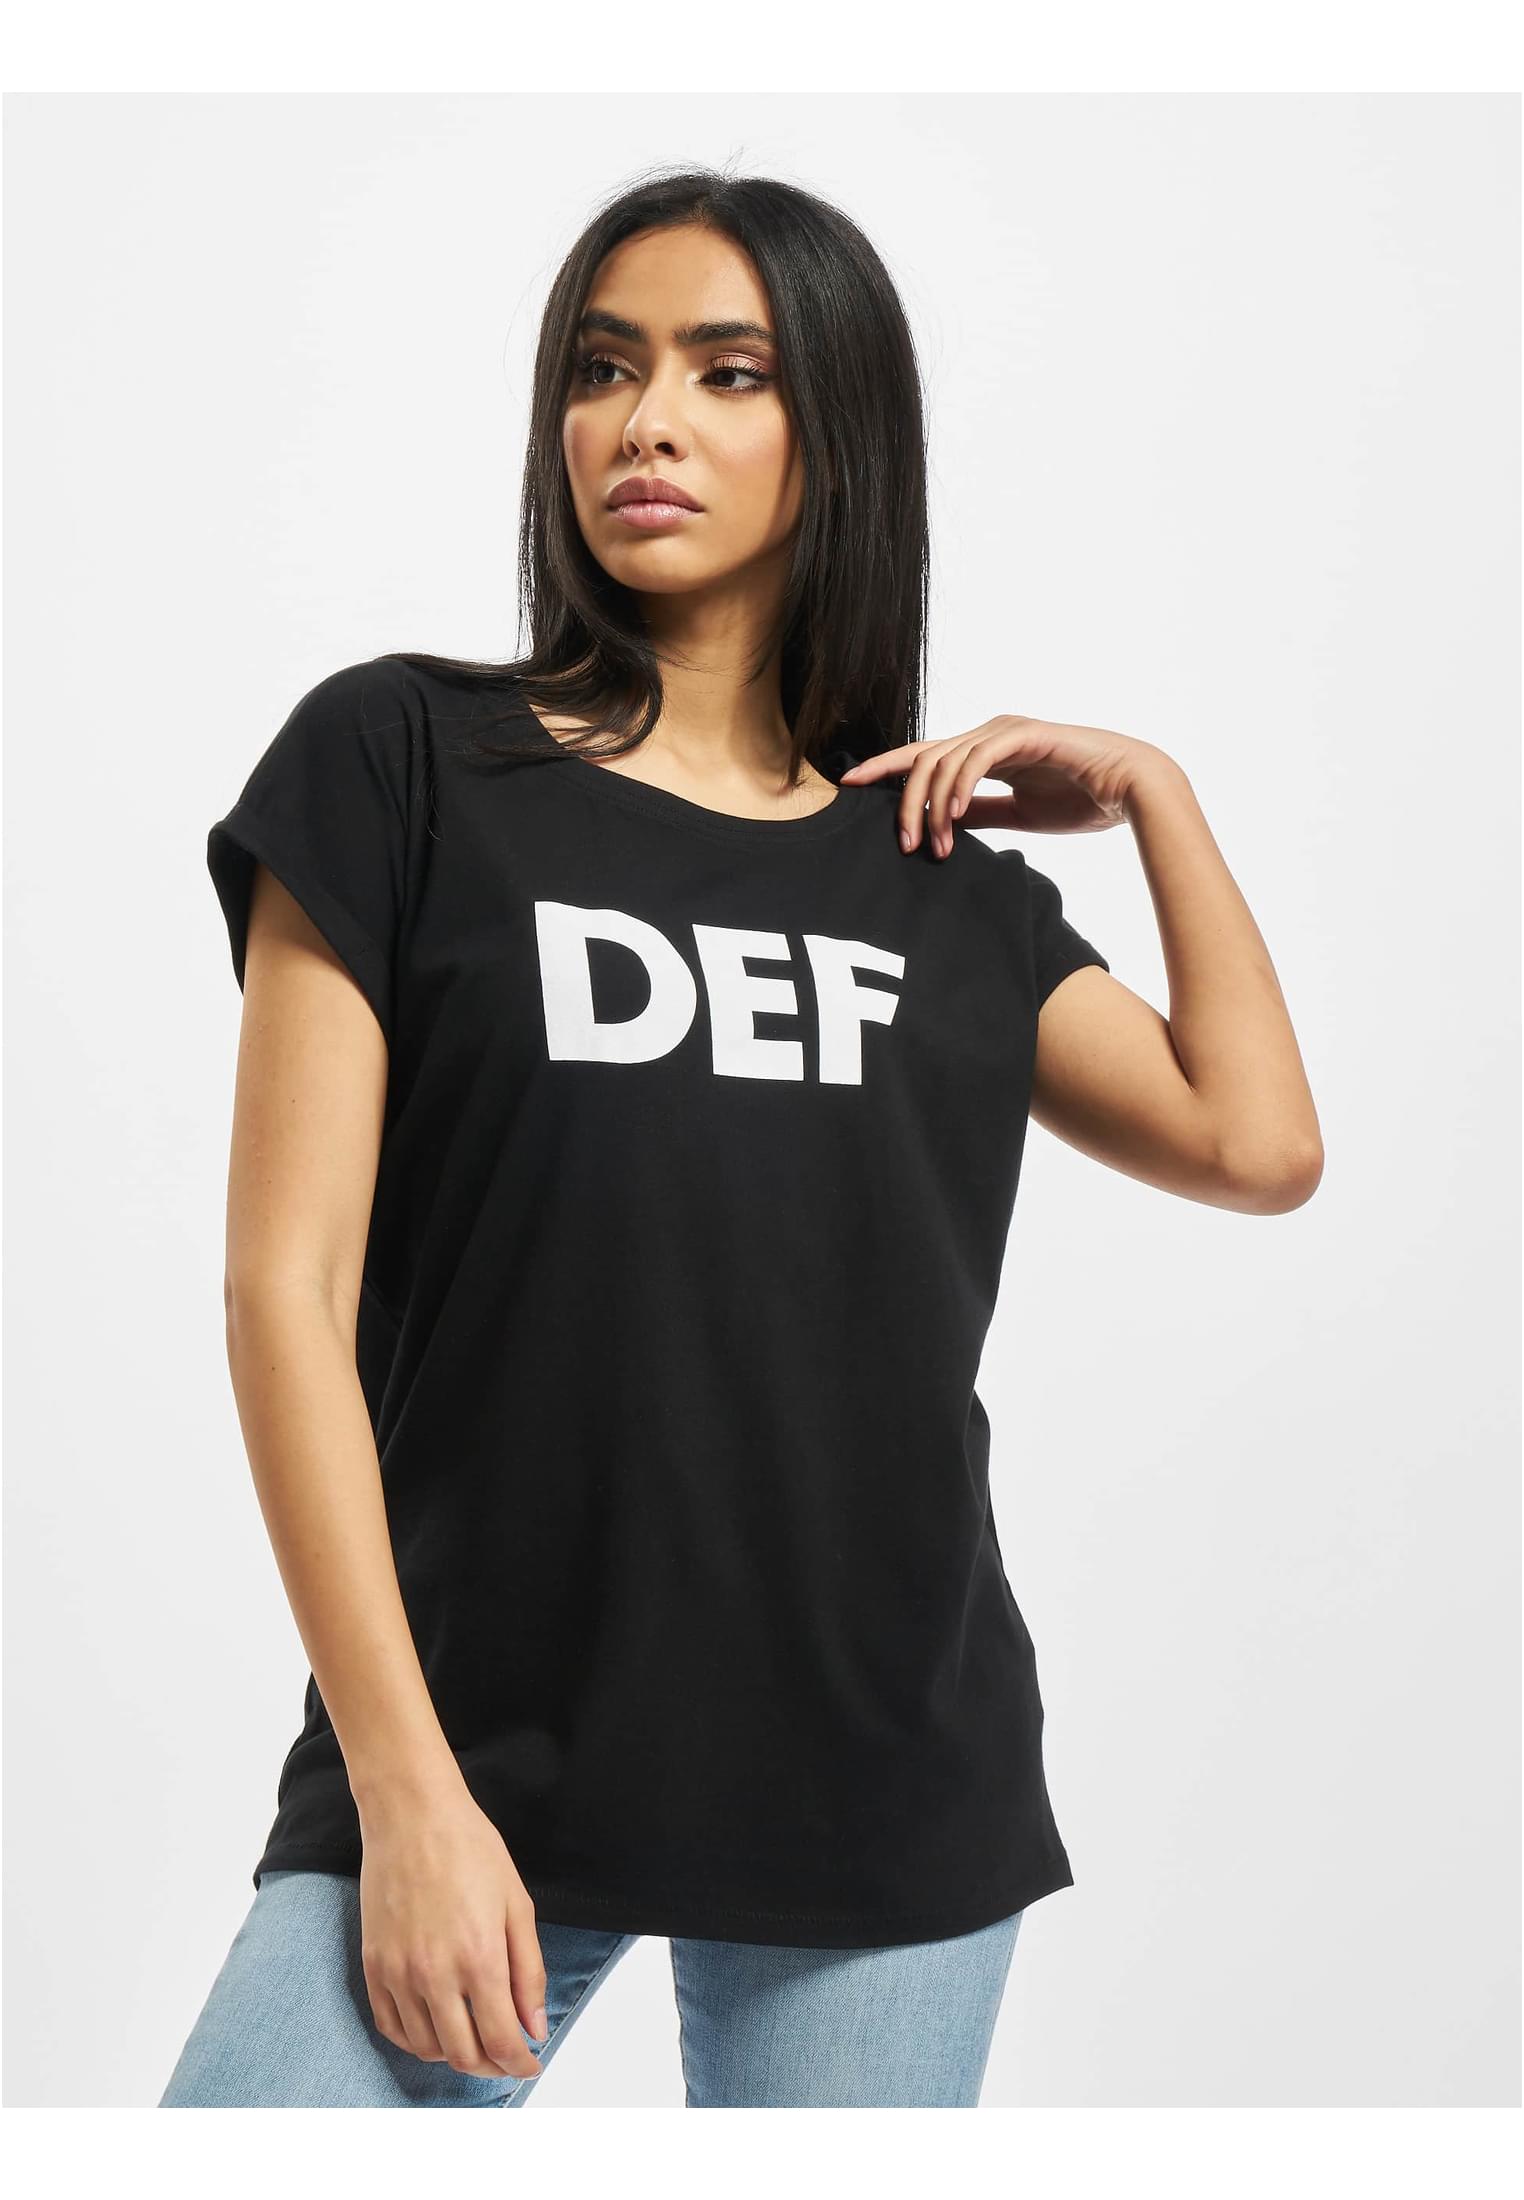 Sizza T-Shirt-DFTS056T